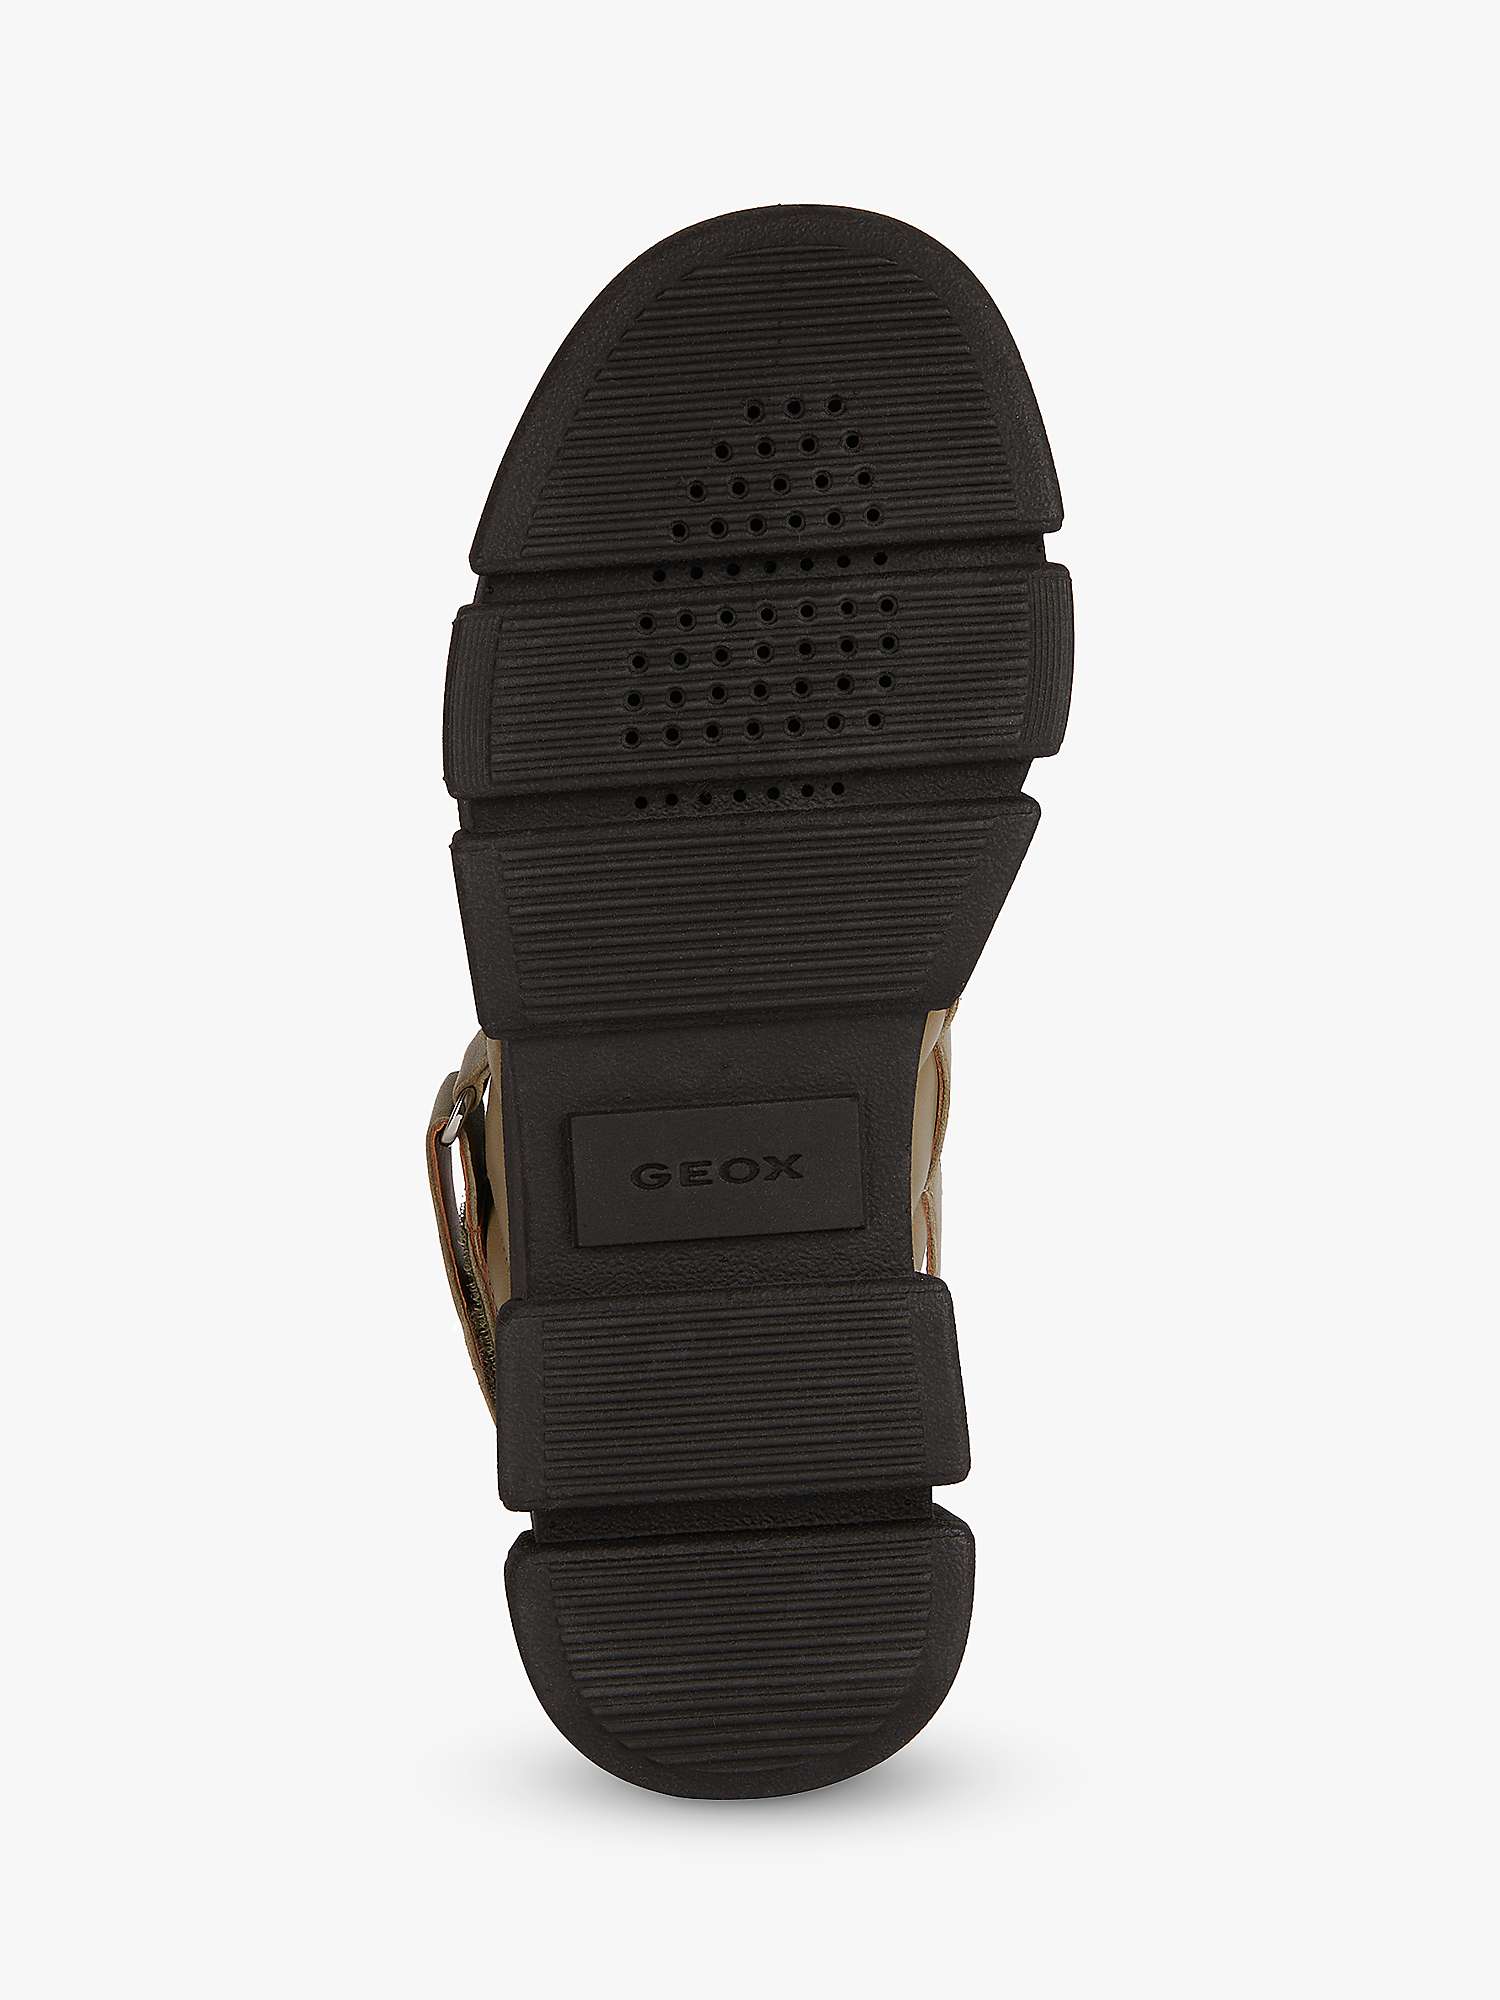 Buy Geox Lisbona Leather Sandals Online at johnlewis.com